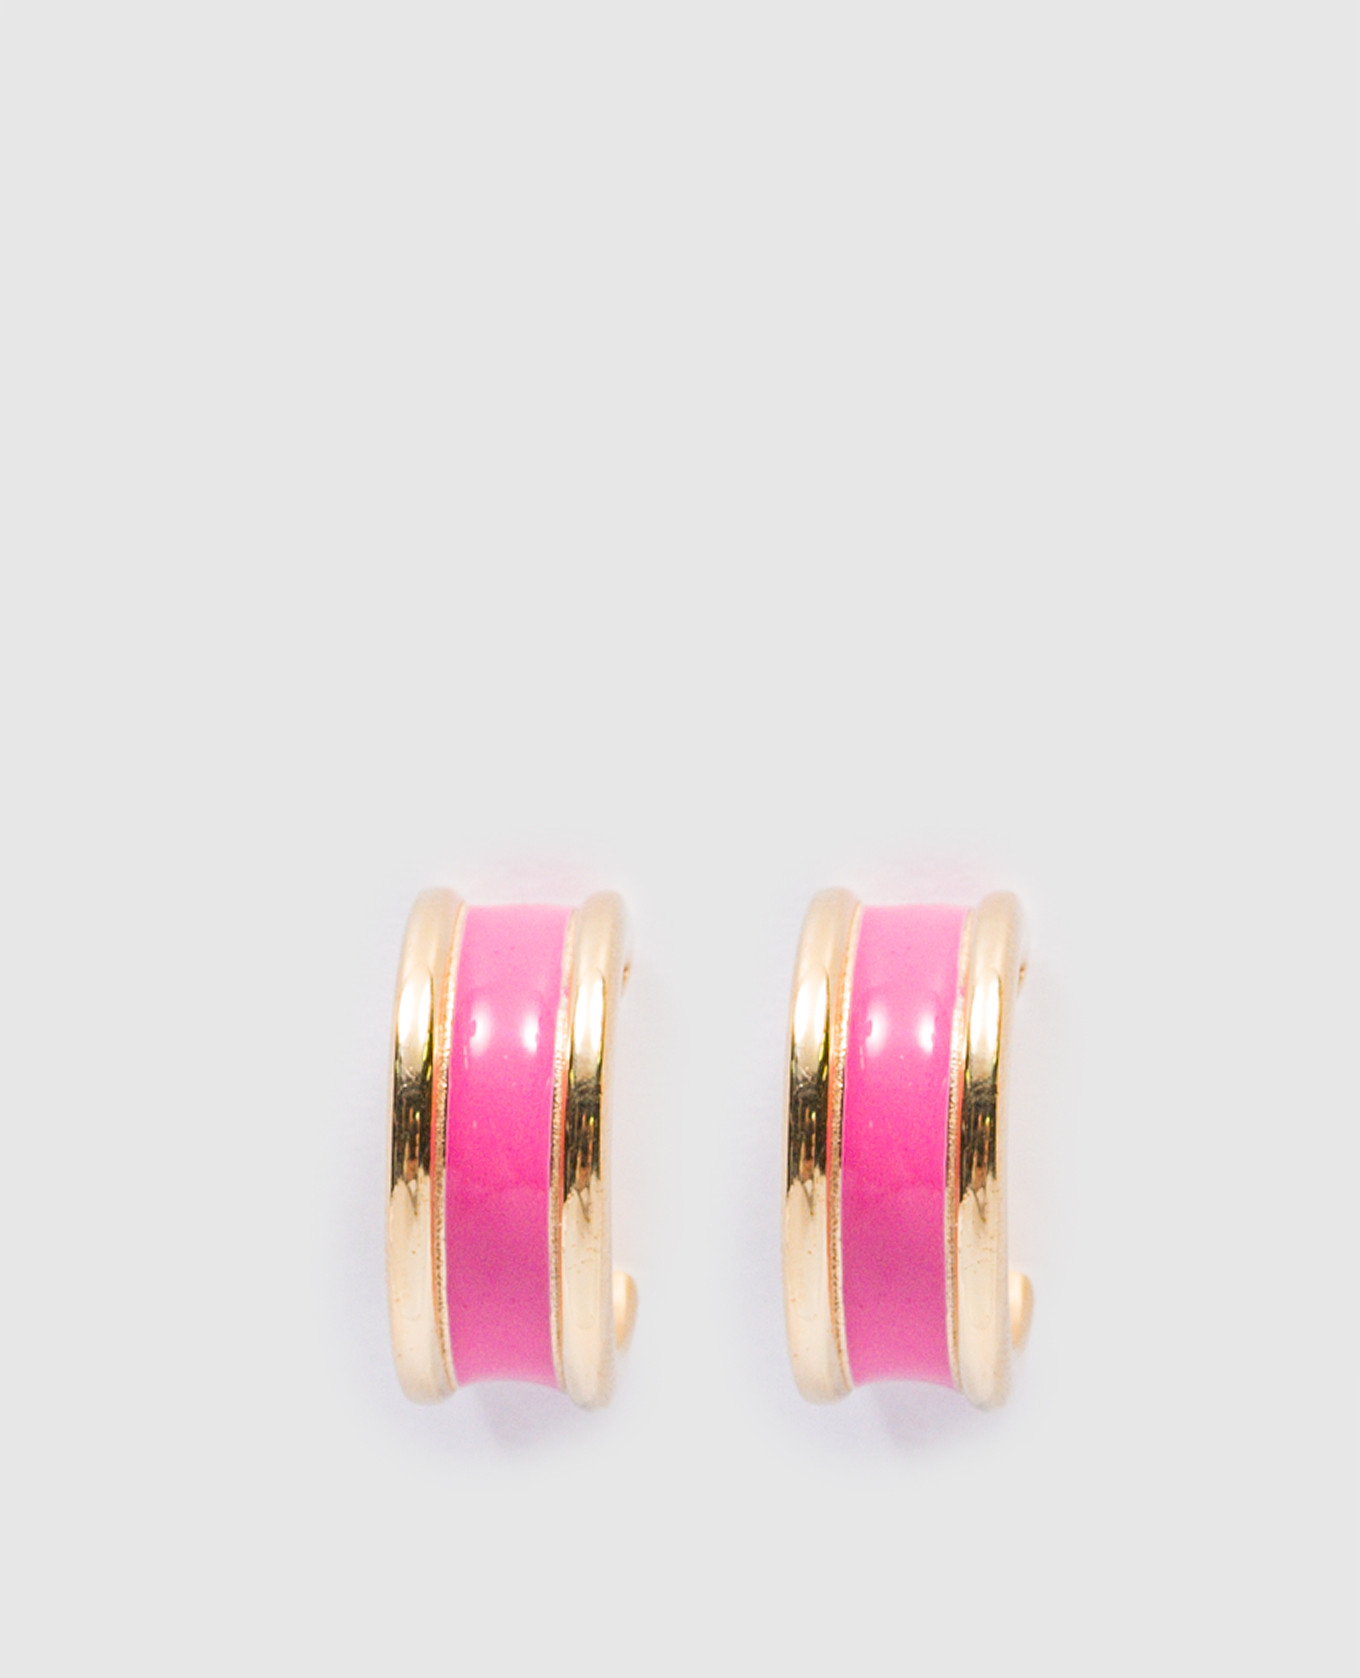 Silver Congo Double Line earrings with pink enamel